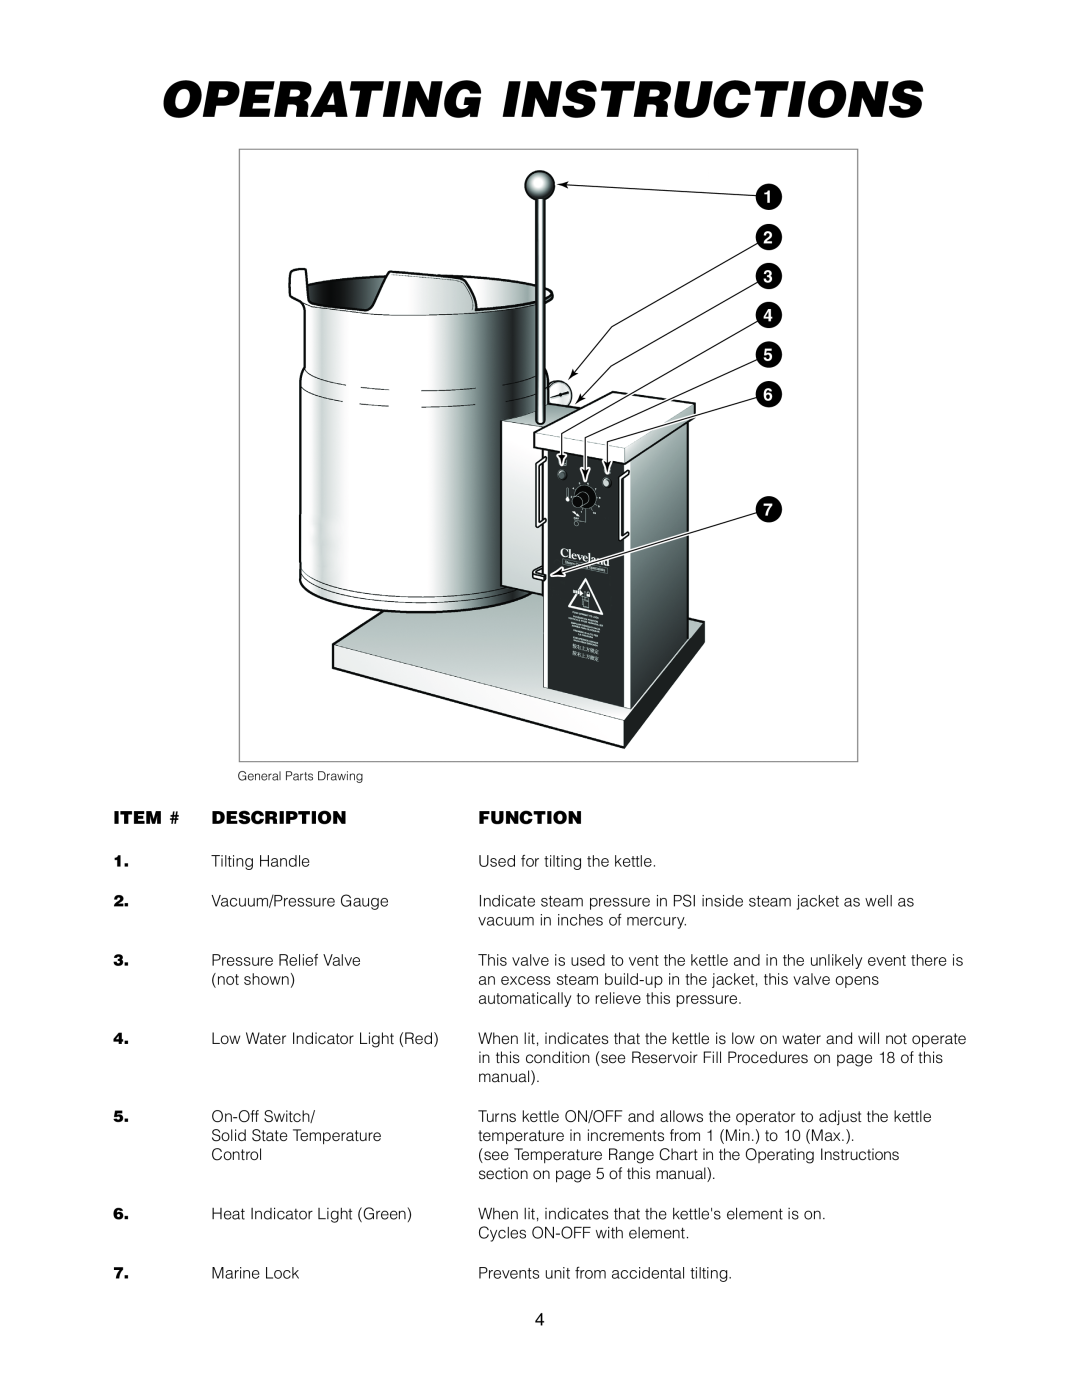 Cleveland Range KET-3-T manual Operating Instructions, Item #, Description, Function 